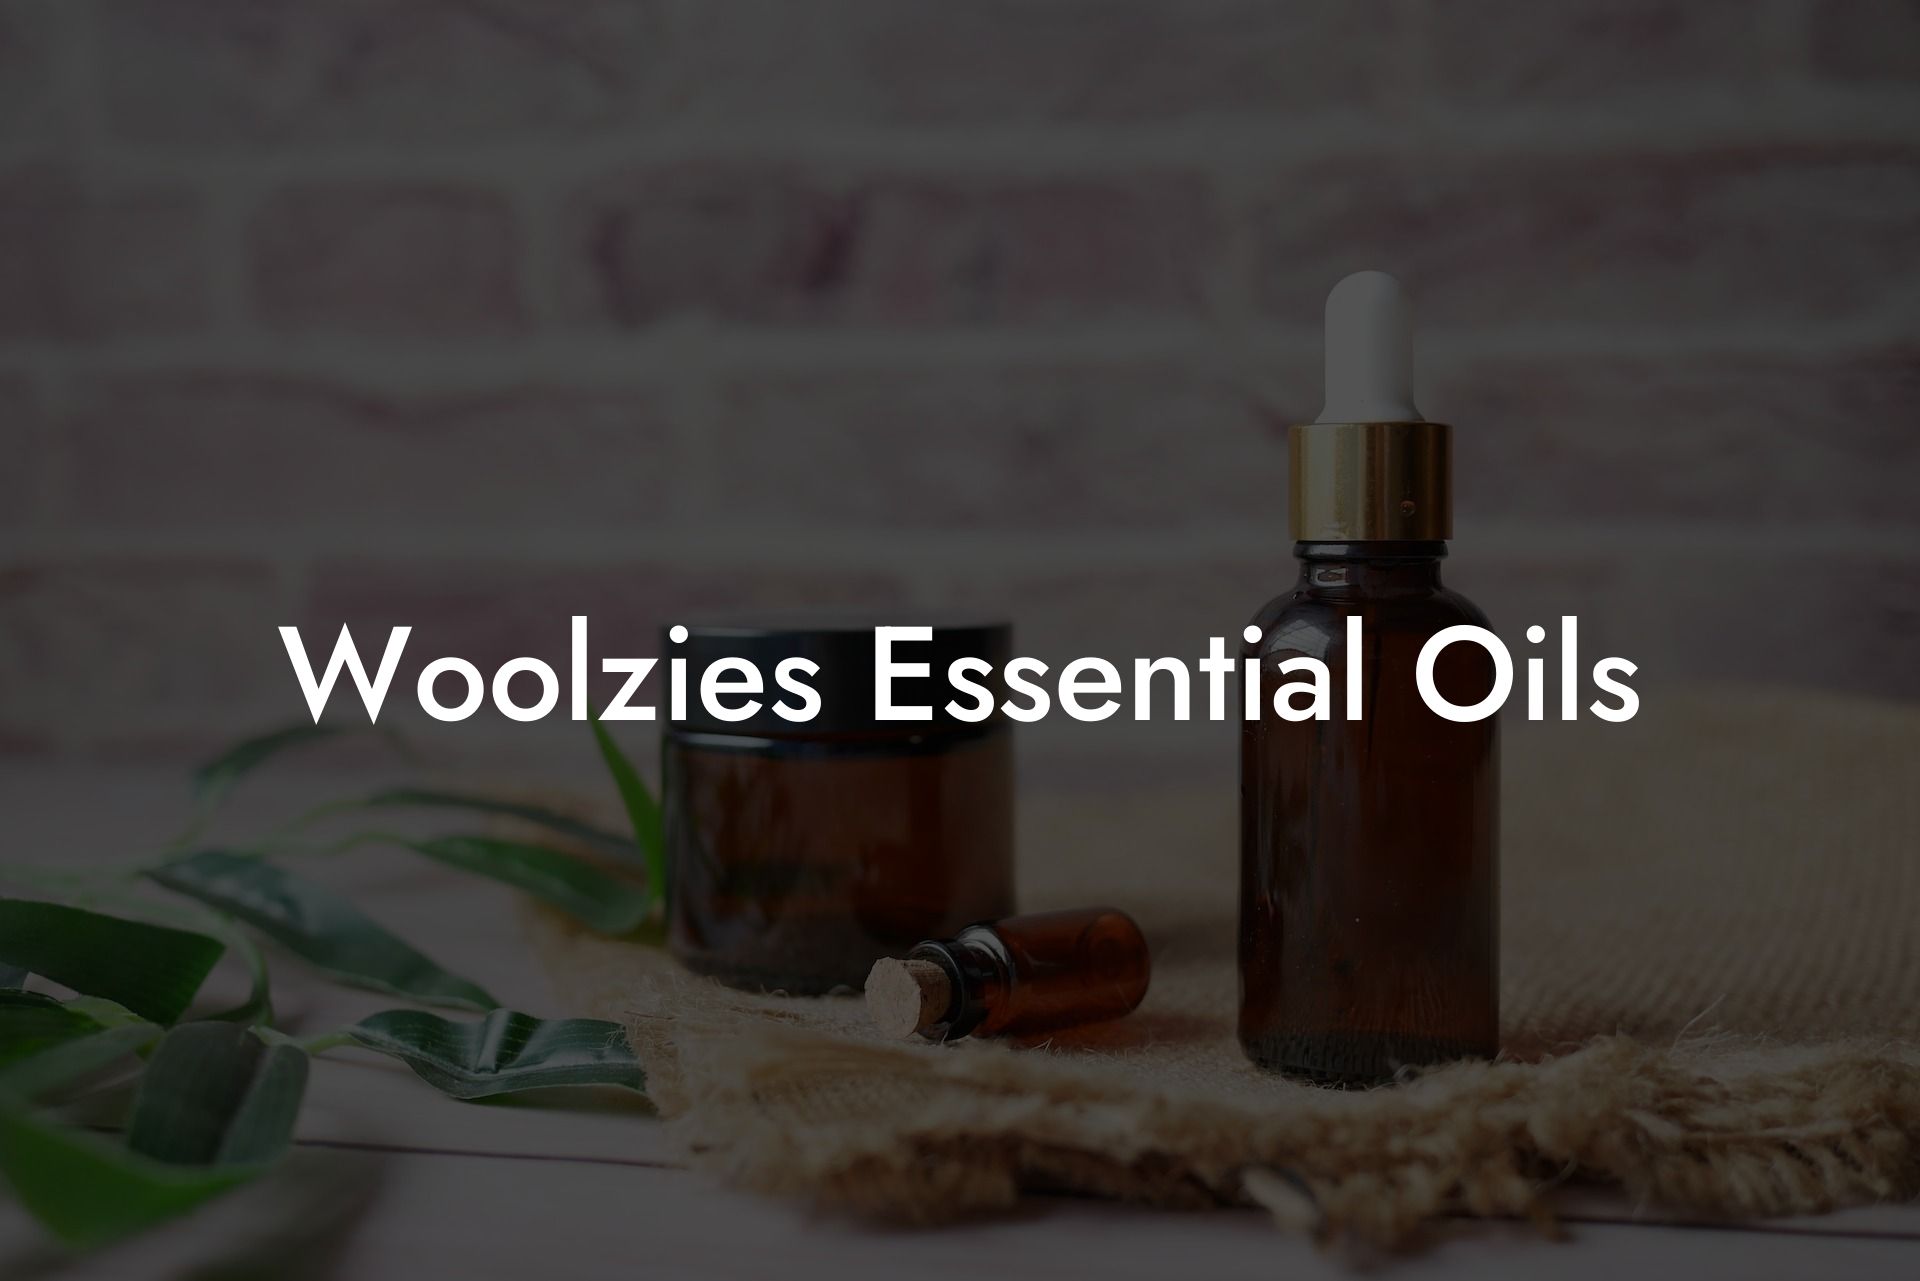 Woolzies Essential Oils